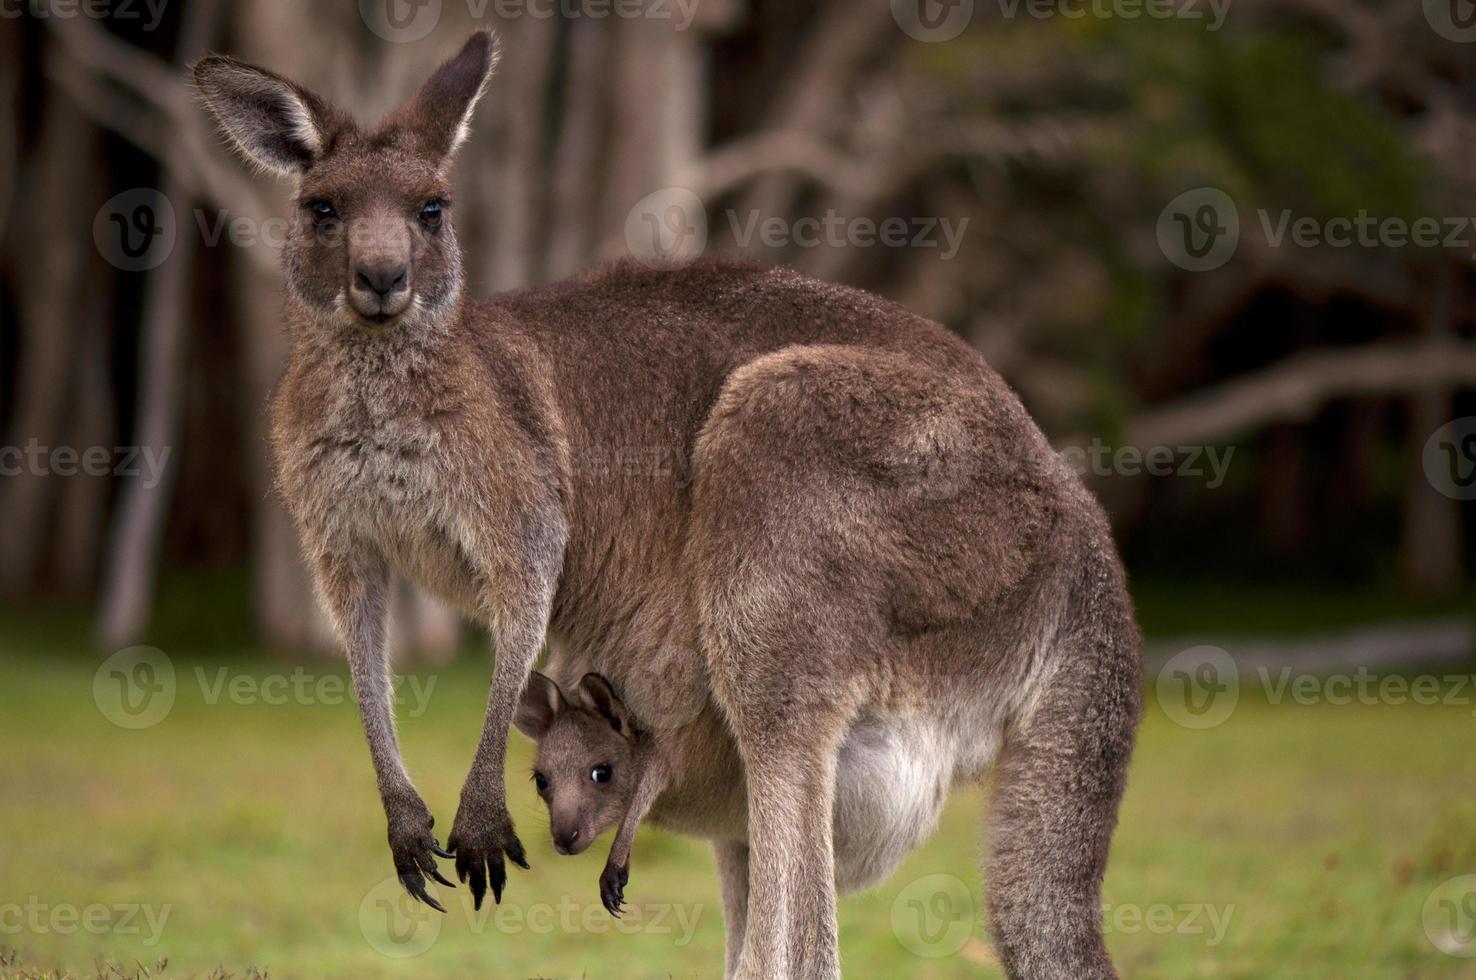 moeder kangoeroe in het bos met haar baby in haar buidel foto